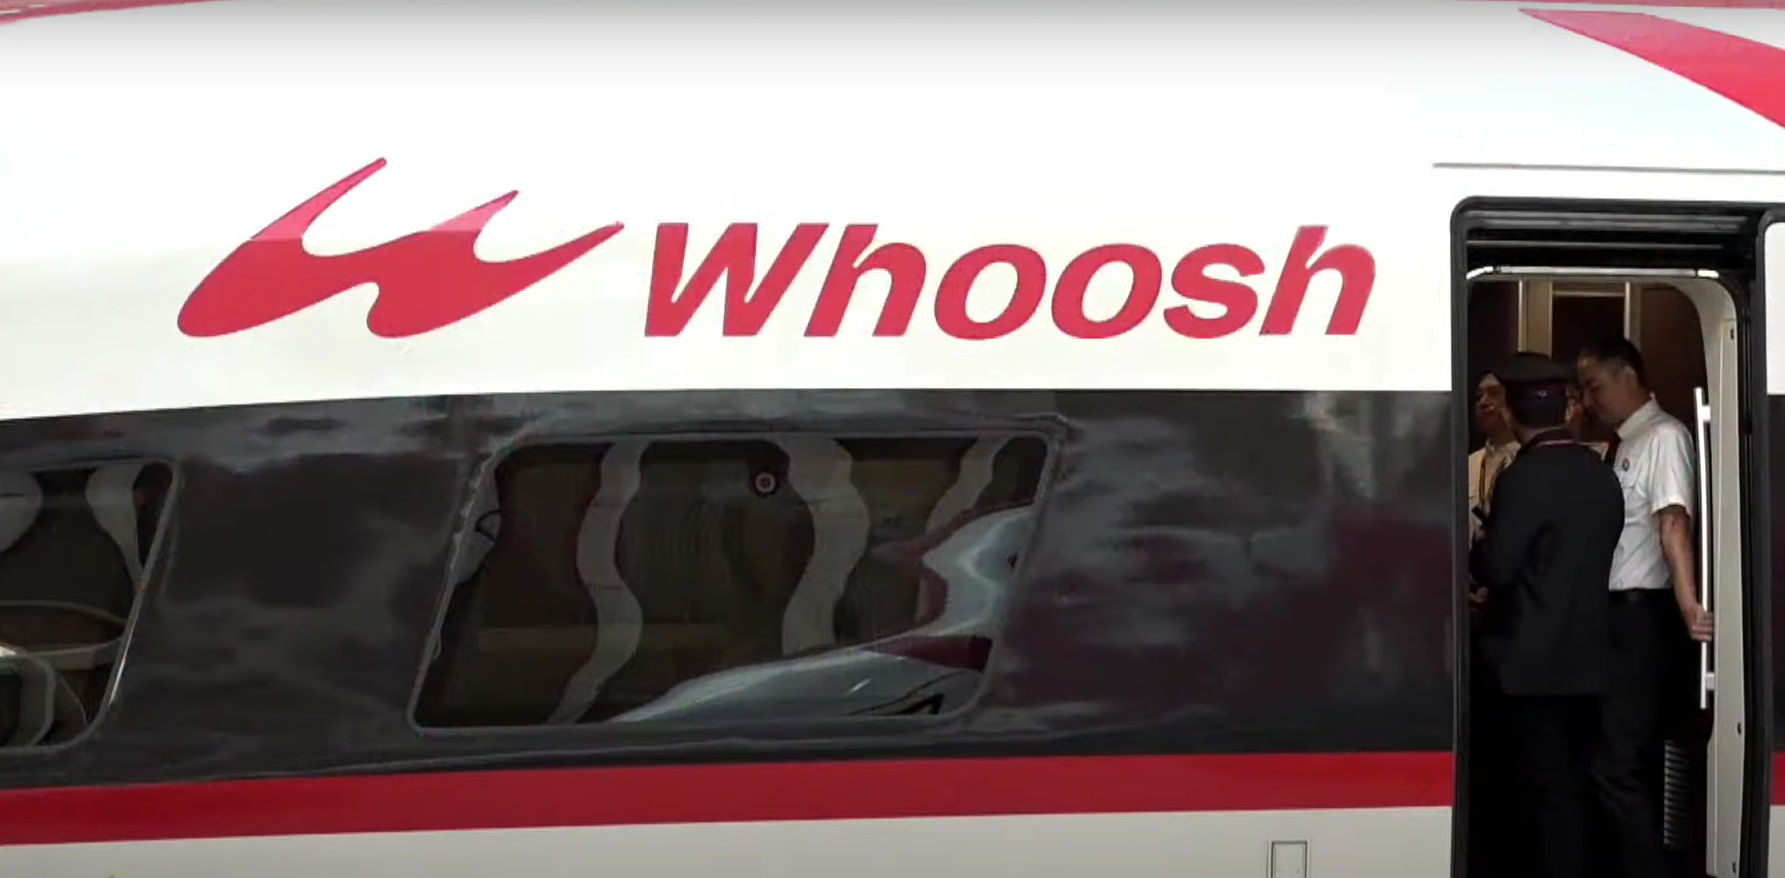 Logo Whoosh pada body kereta cepat